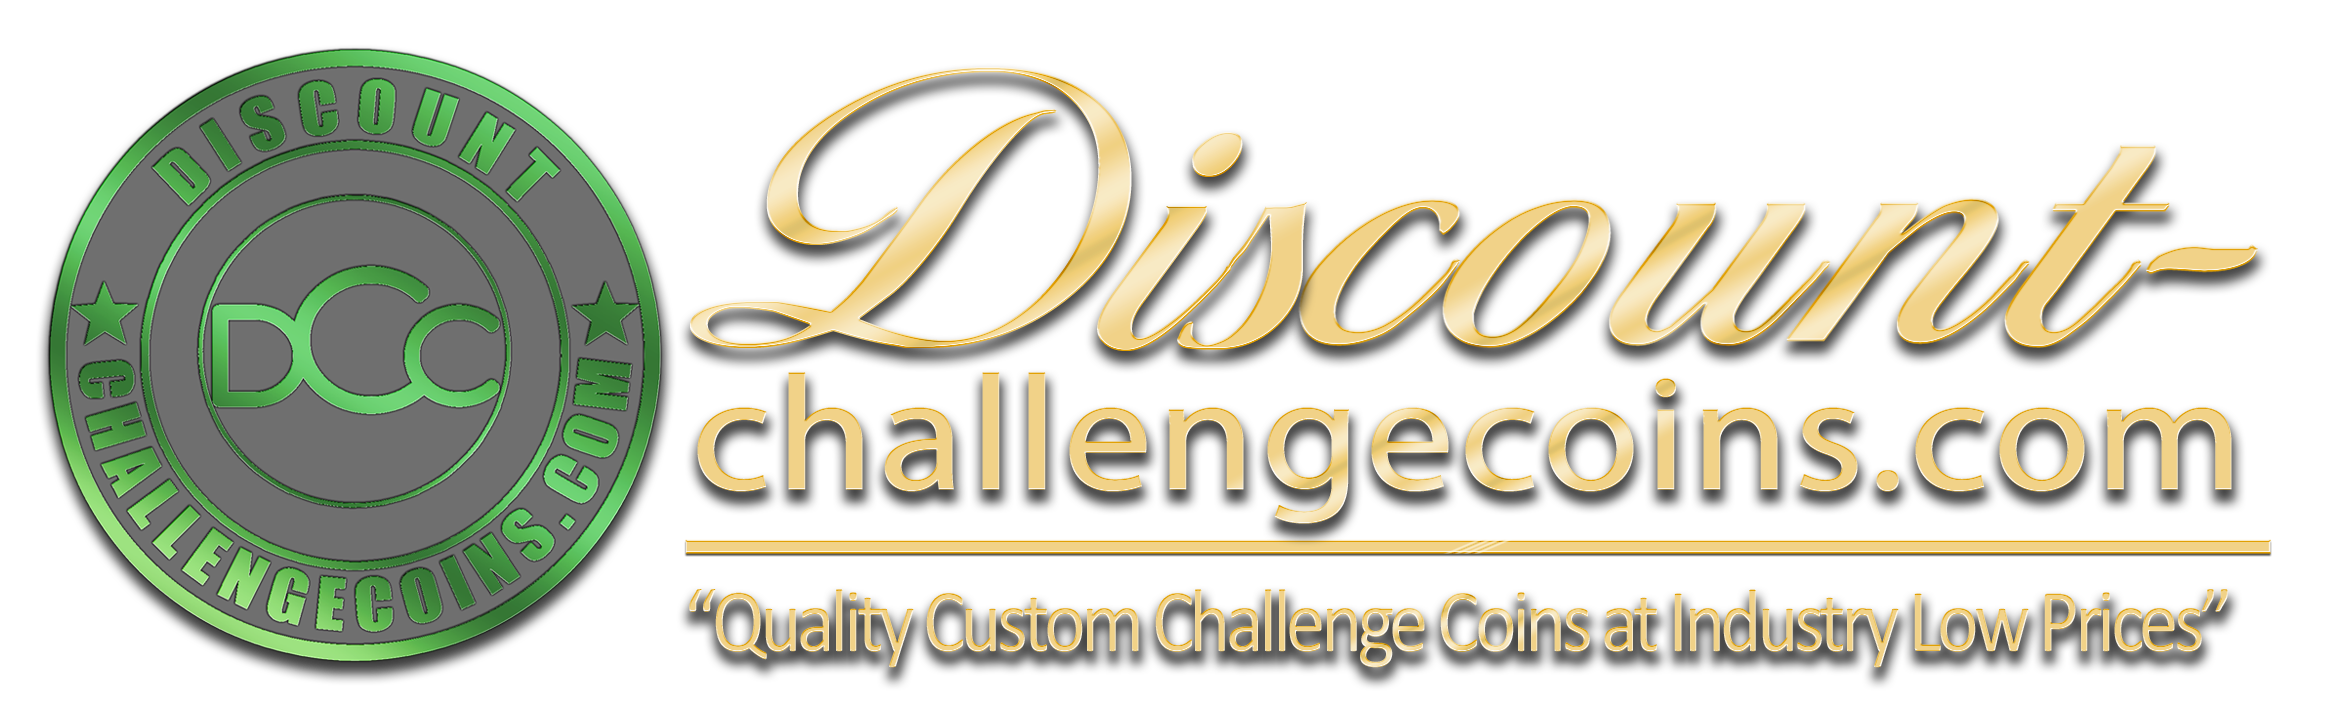 Custom Challengecoins Logo from Discount Challengecoins.com